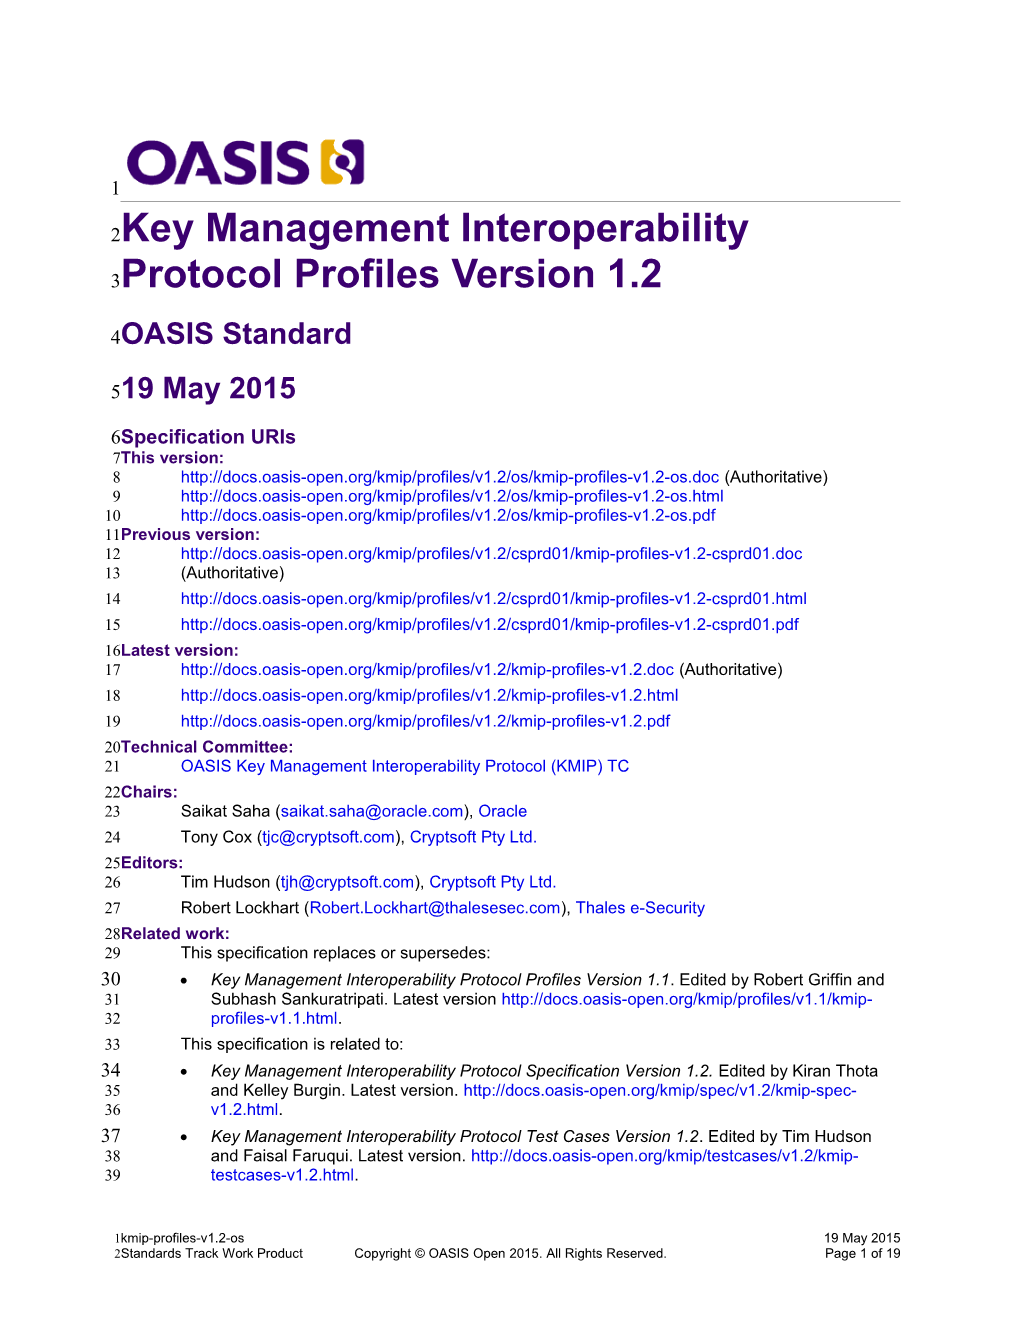 Key Management Interoperability Protocol Profiles Version 1.2